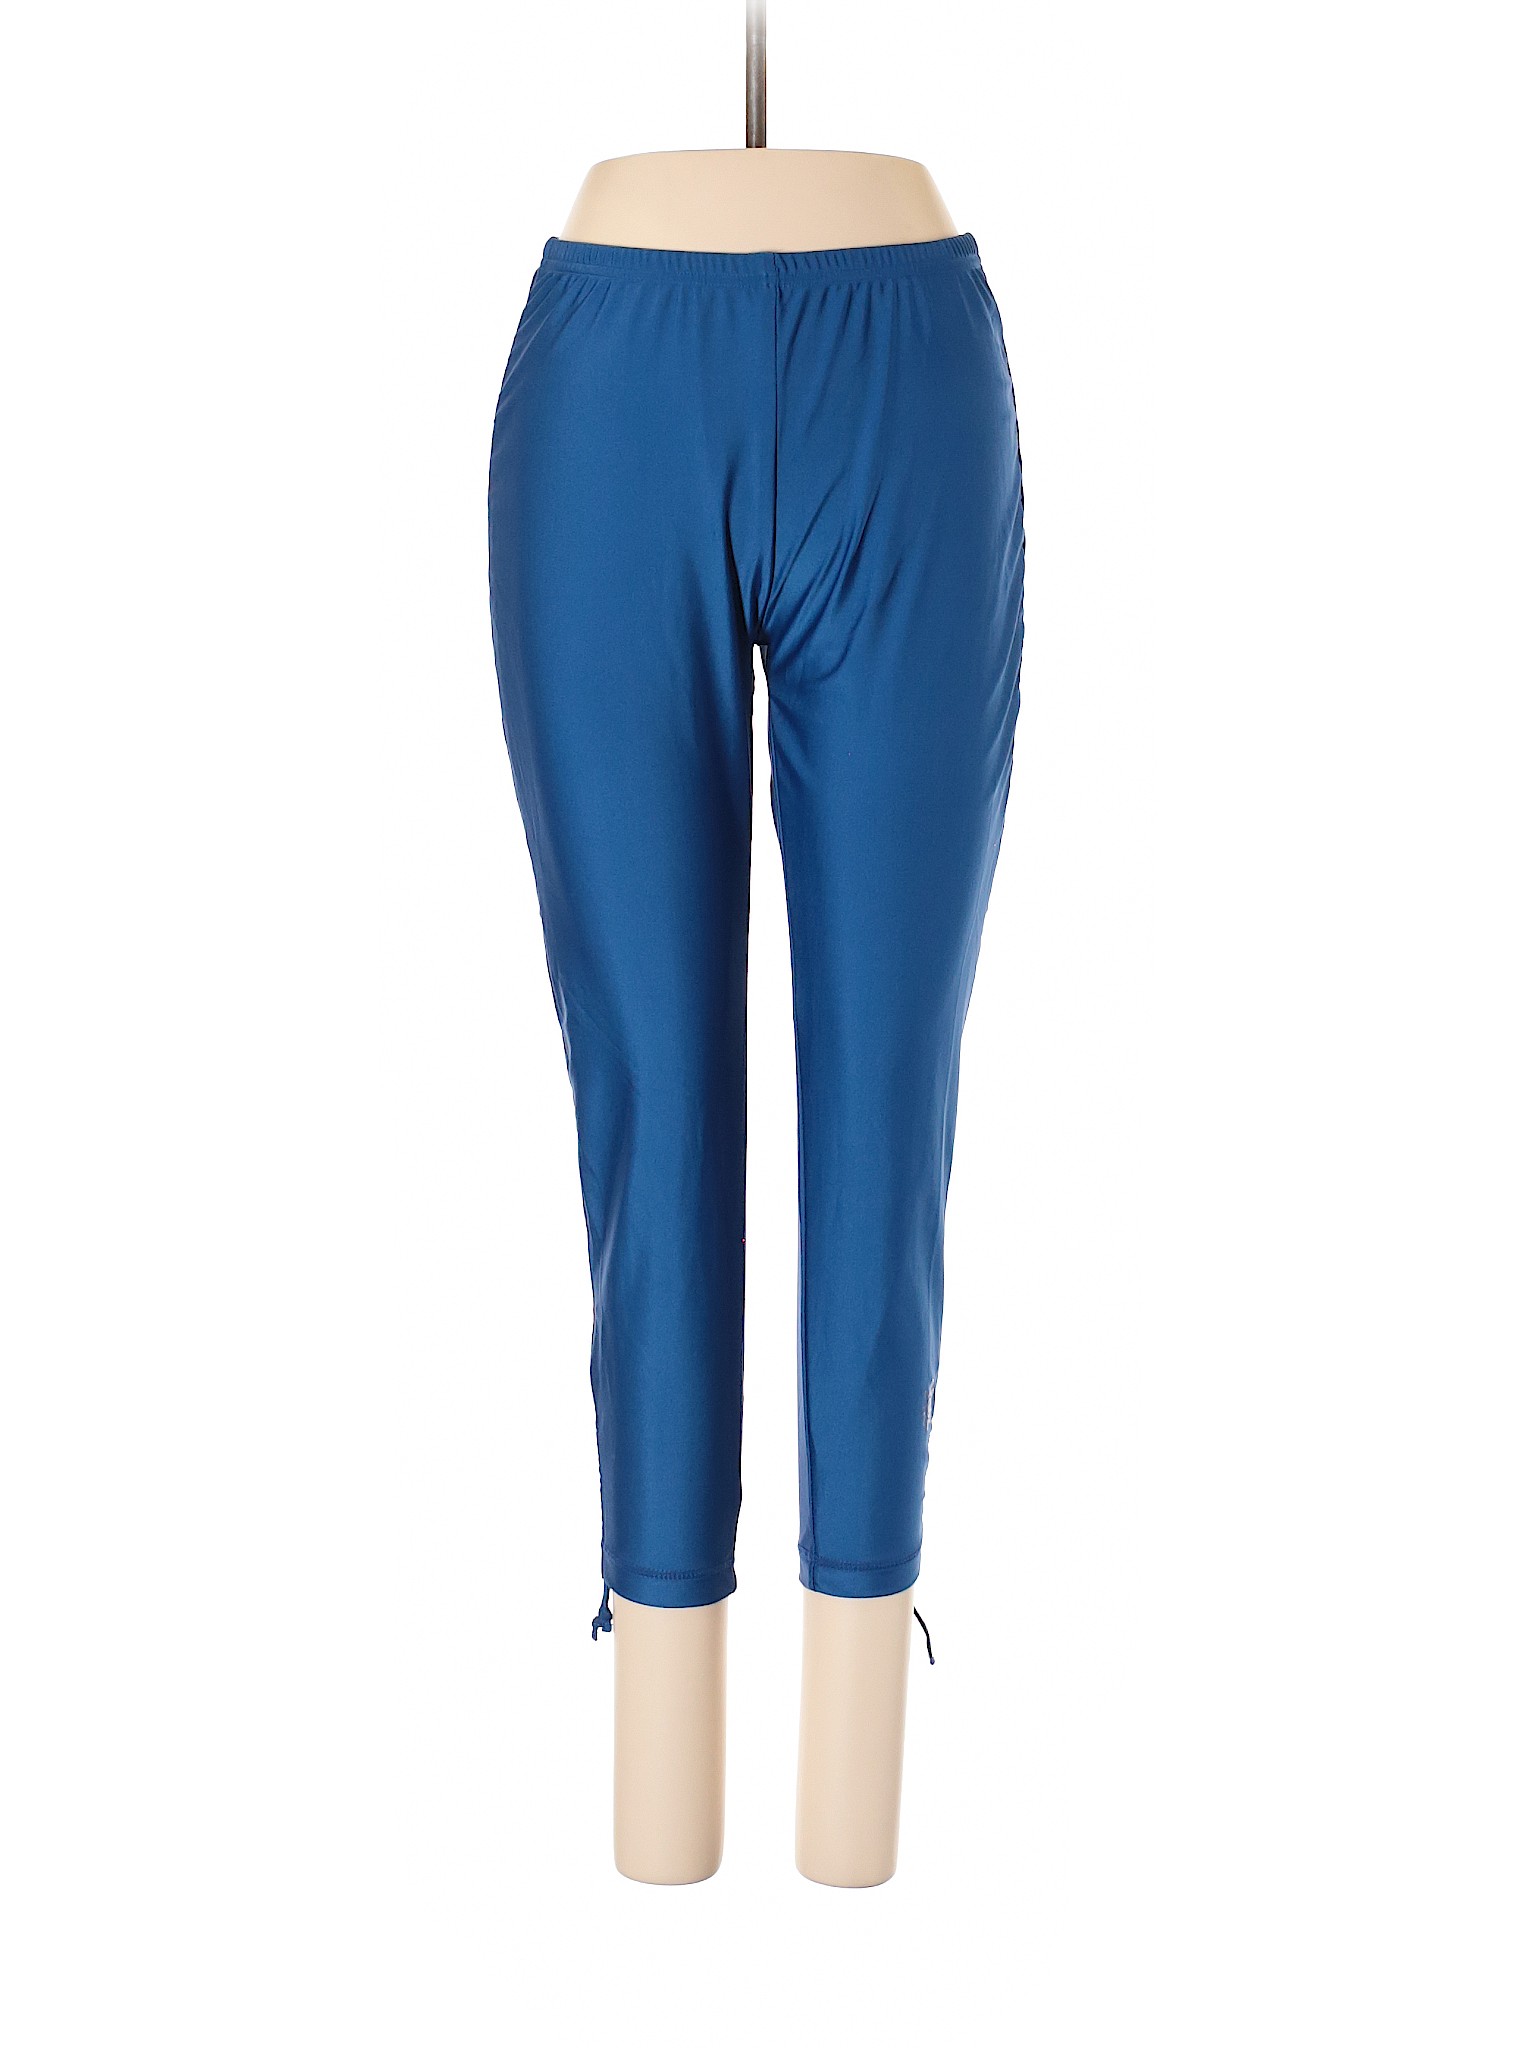 UV Skinz Solid Blue Active Pants Size S - 93% off | thredUP